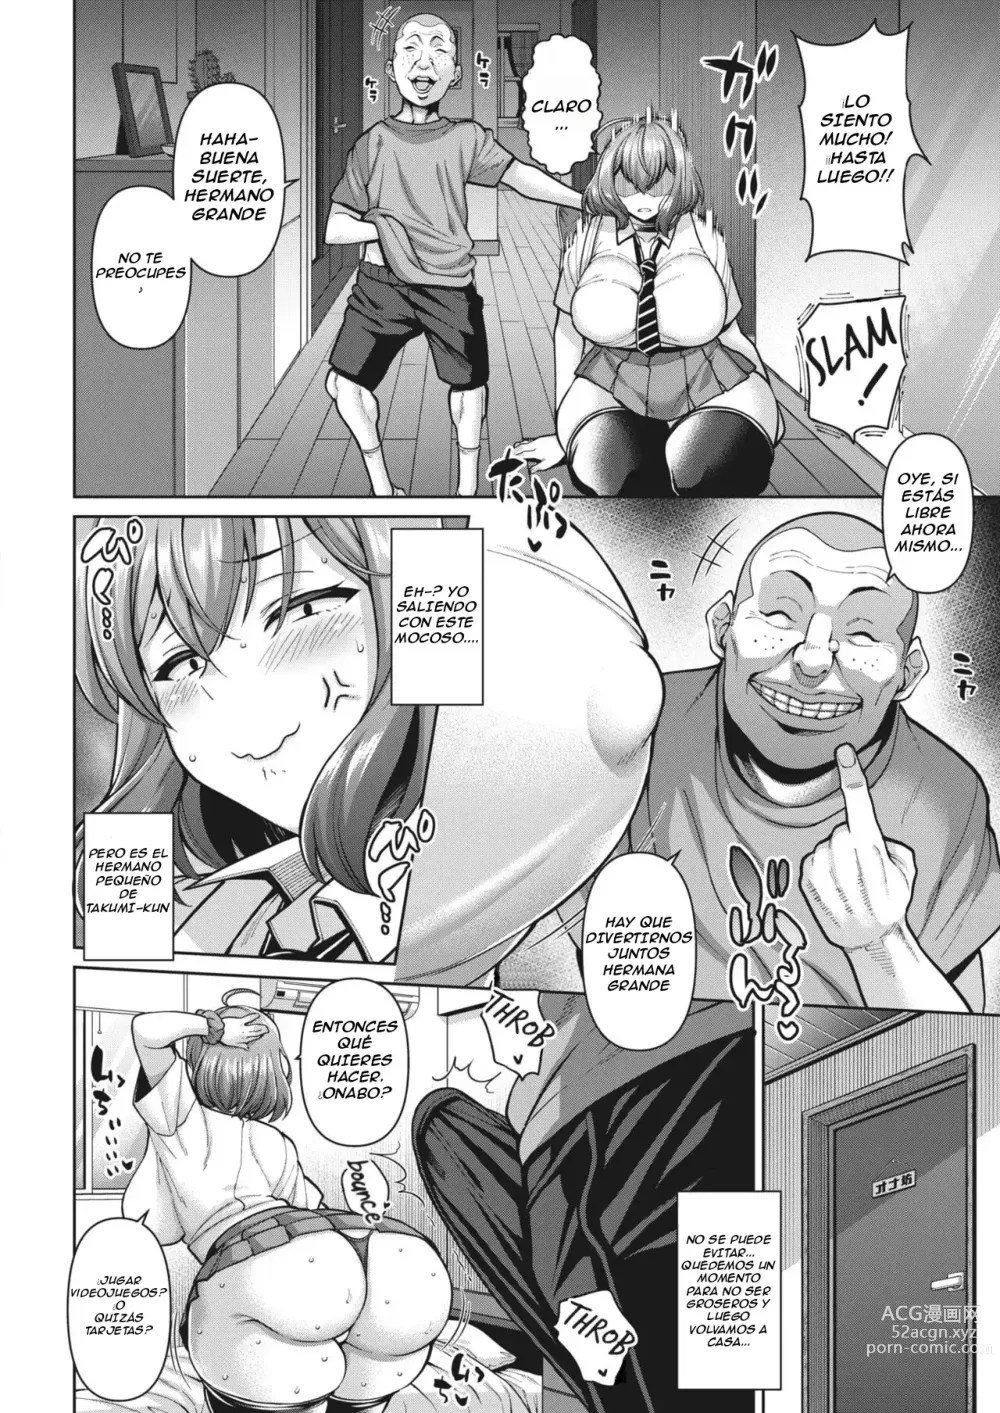 Page 4 of manga Onabou ni Goyoujin!?